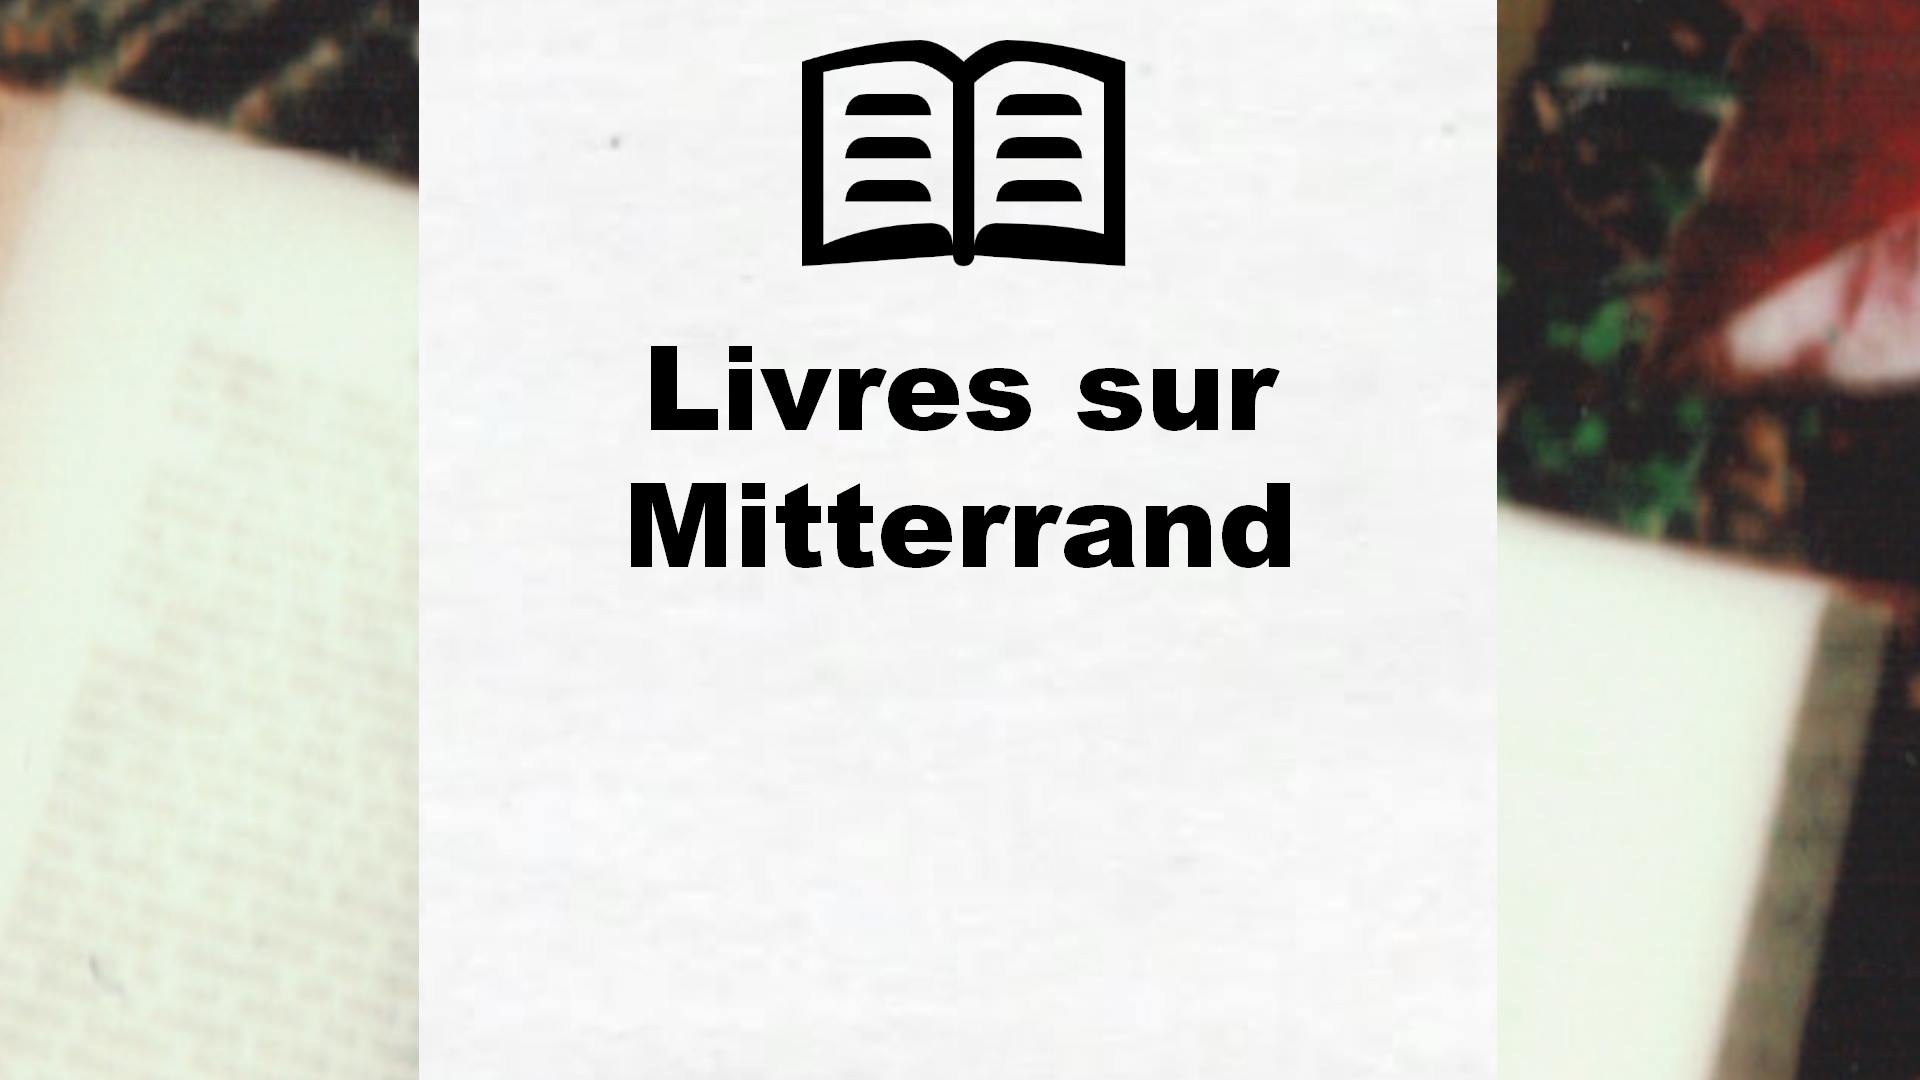 Livres sur Mitterrand